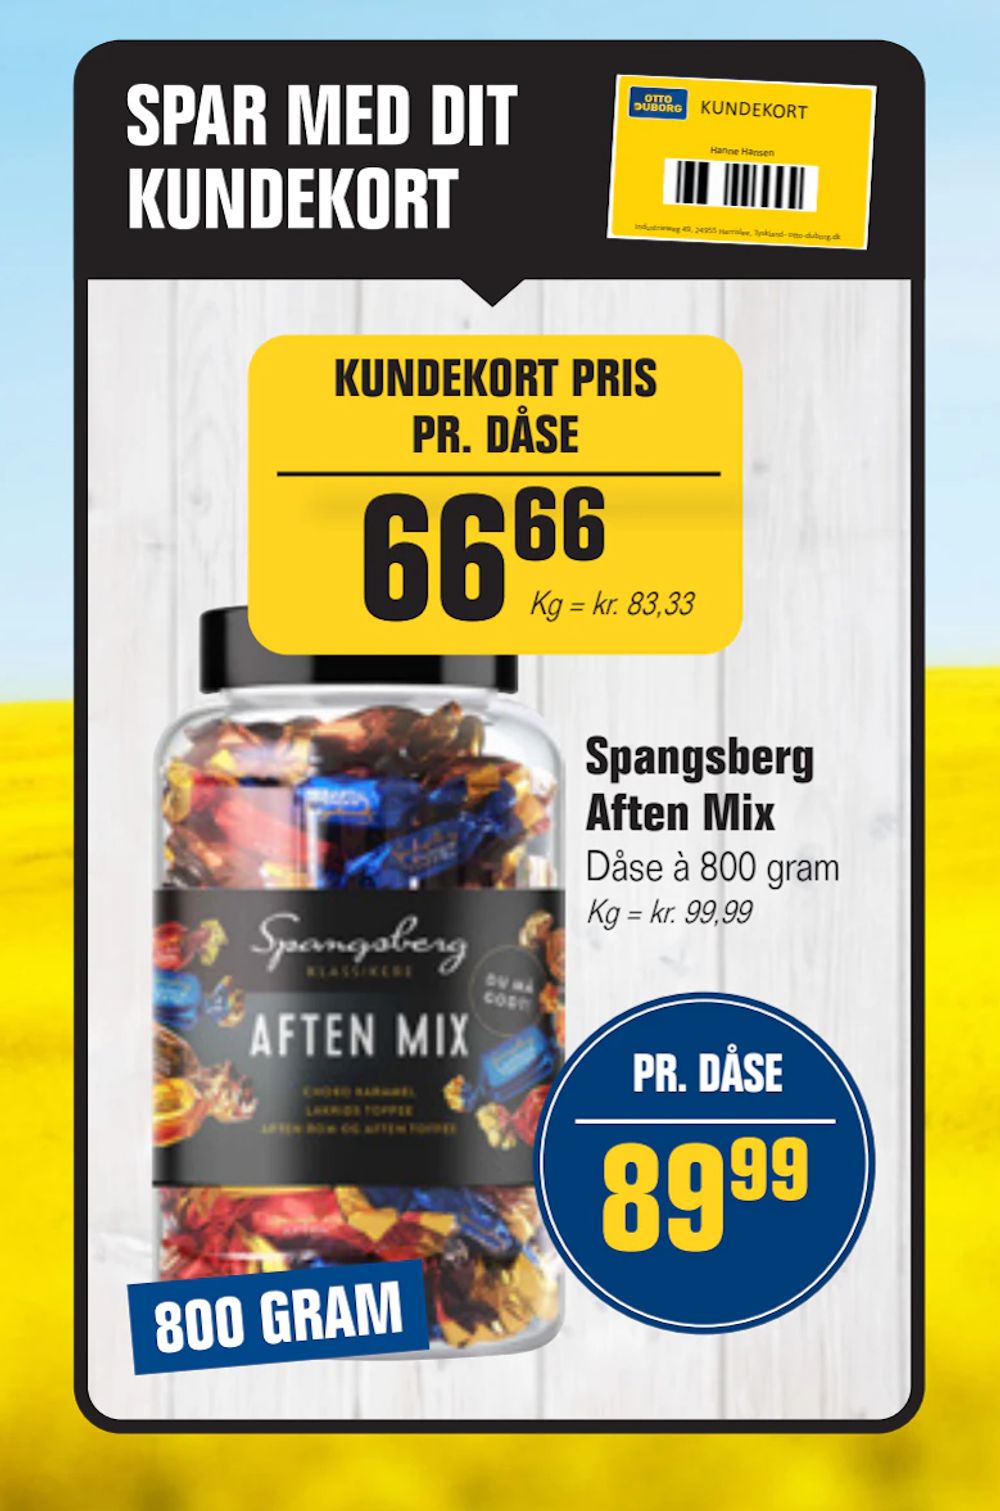 Tilbud på Spangsberg Aften Mix fra Otto Duborg til 89,99 kr.